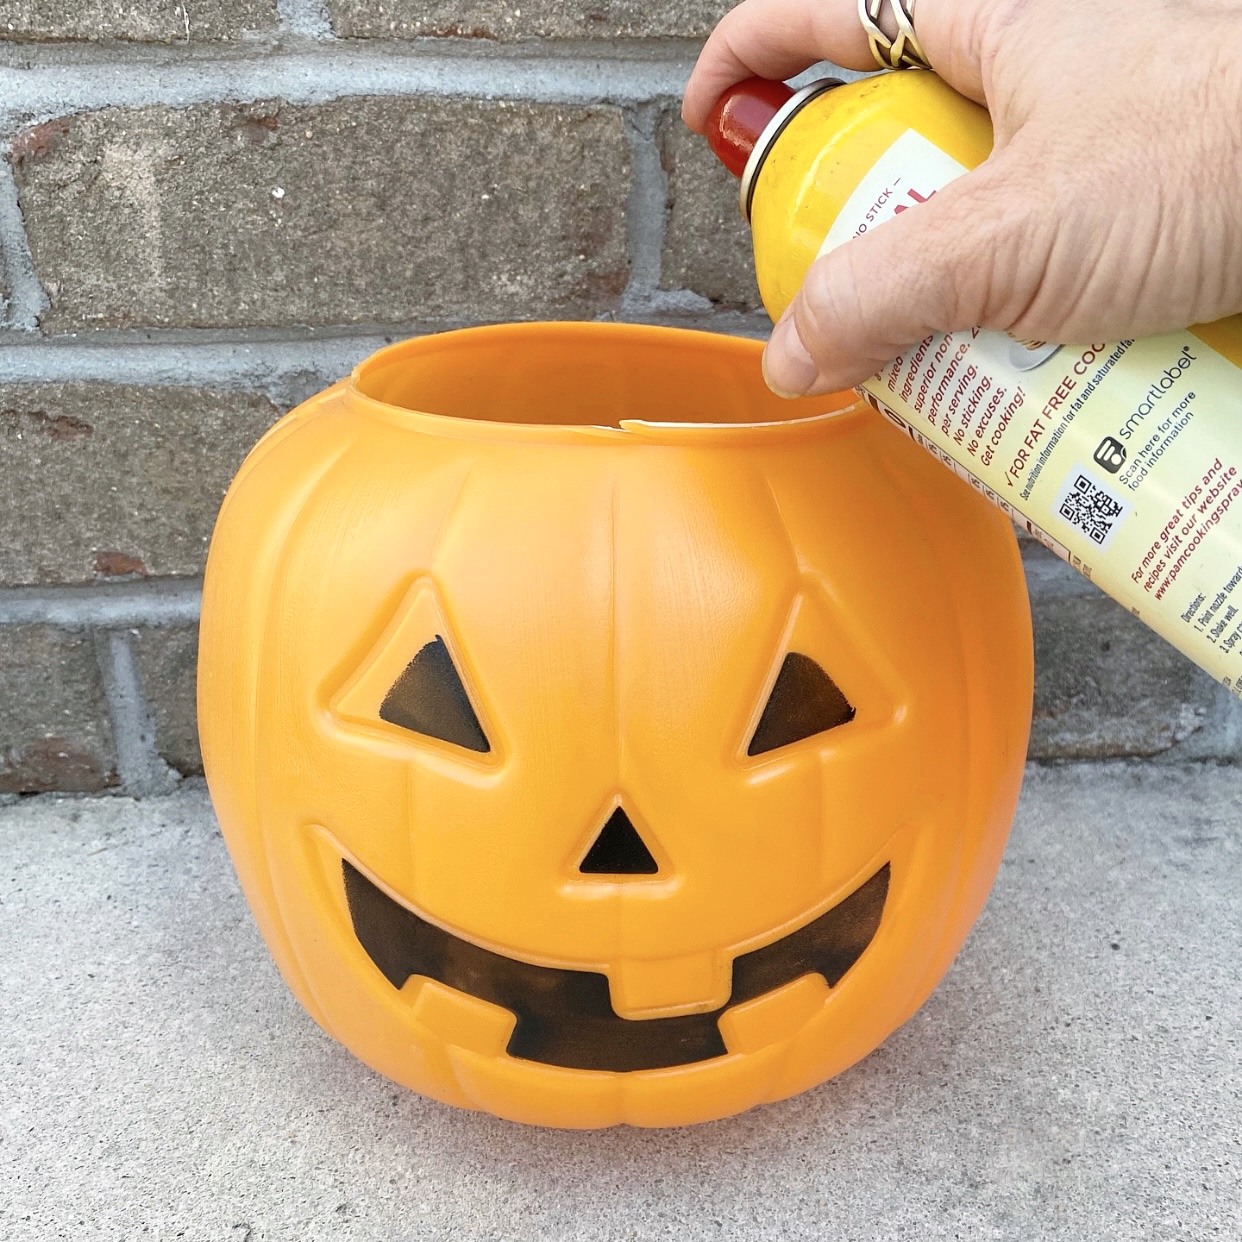 Spraying cooking spray inside an orange plastic trick or treat plastic pail.